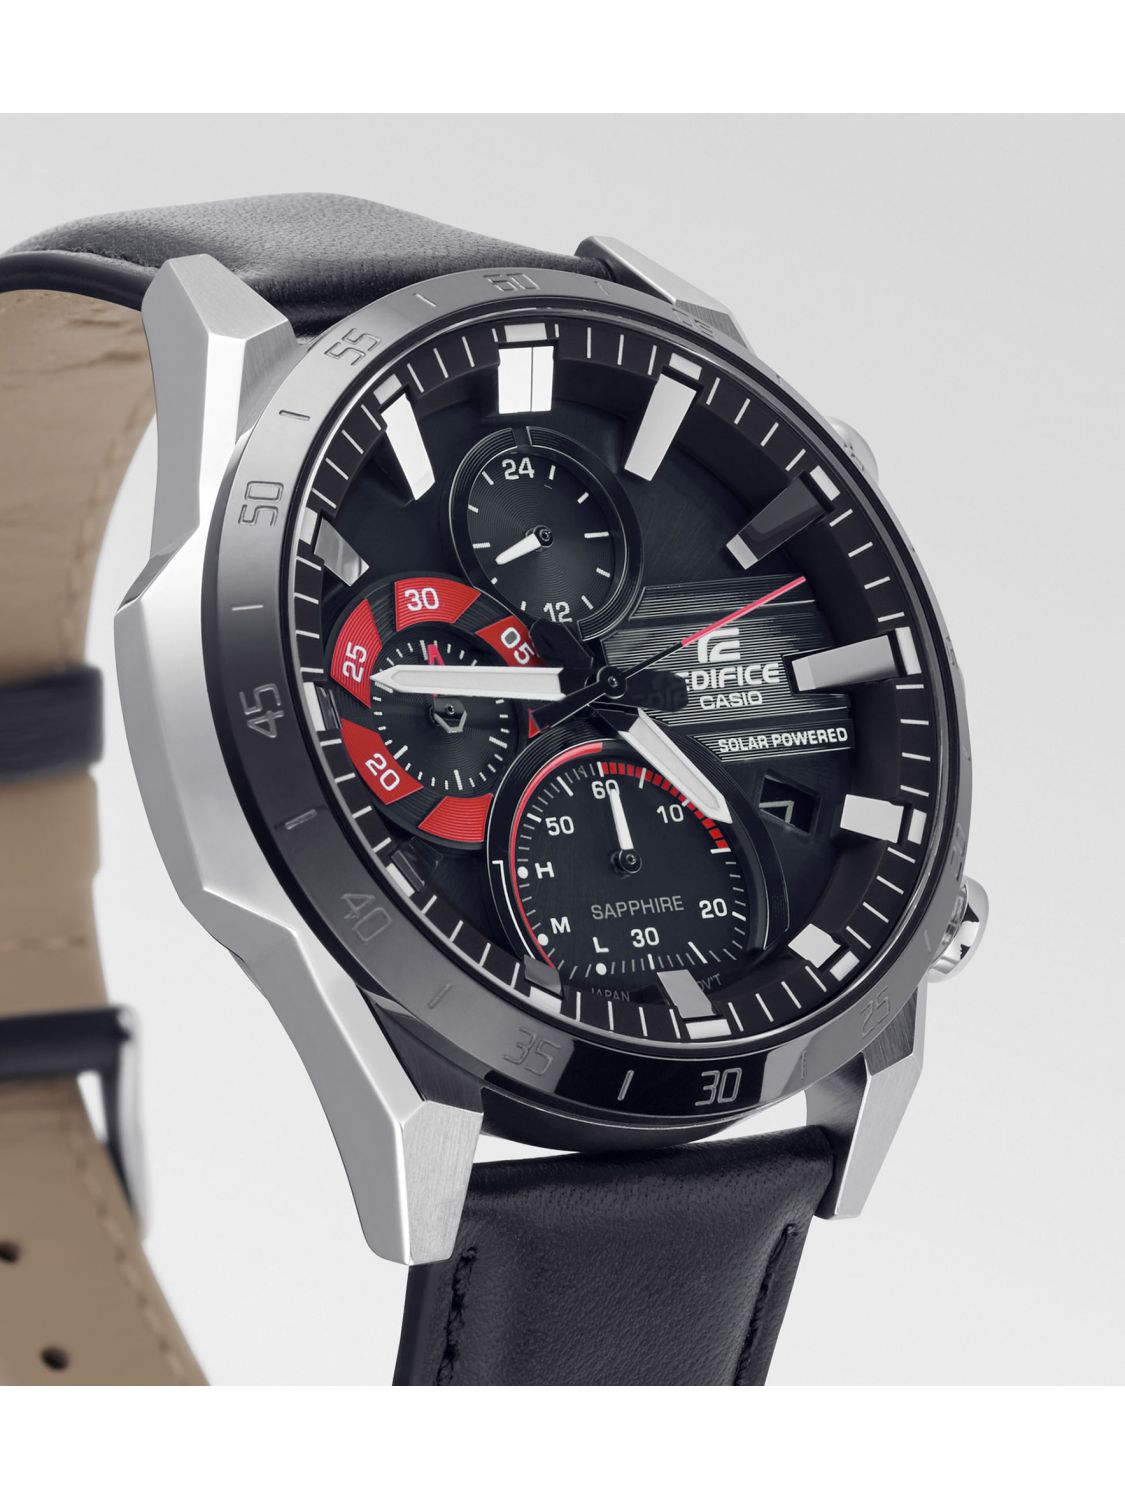 Casio Edifice Men\'s Watch Solar Black/Red EFS-S620BL-1AVUEF • uhrcenter